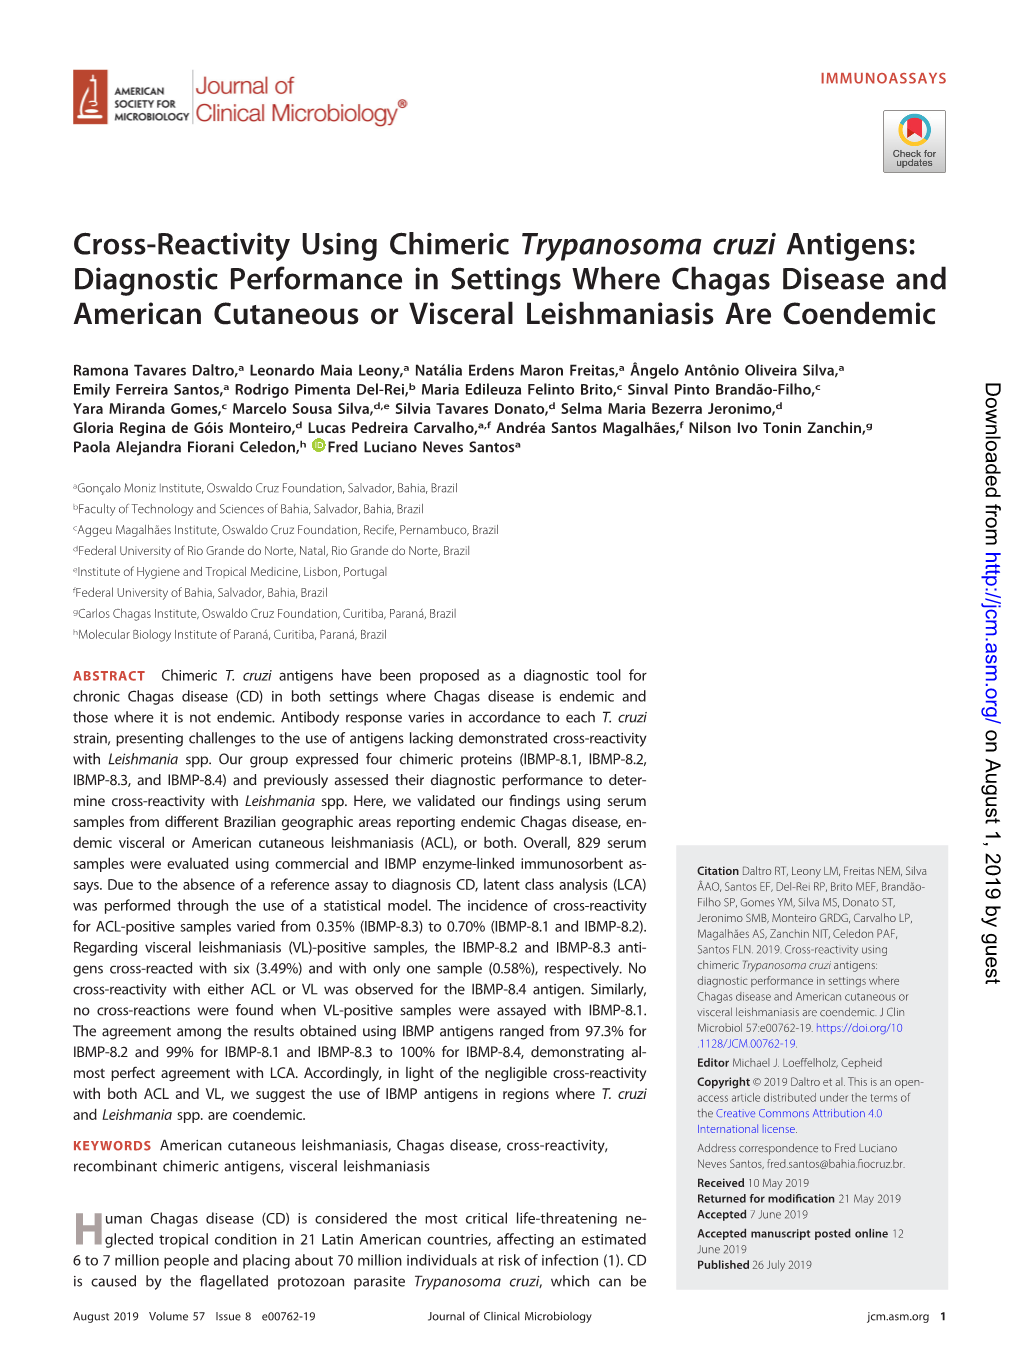 Cross-Reactivity Using Chimeric Trypanosoma Cruzi Antigens